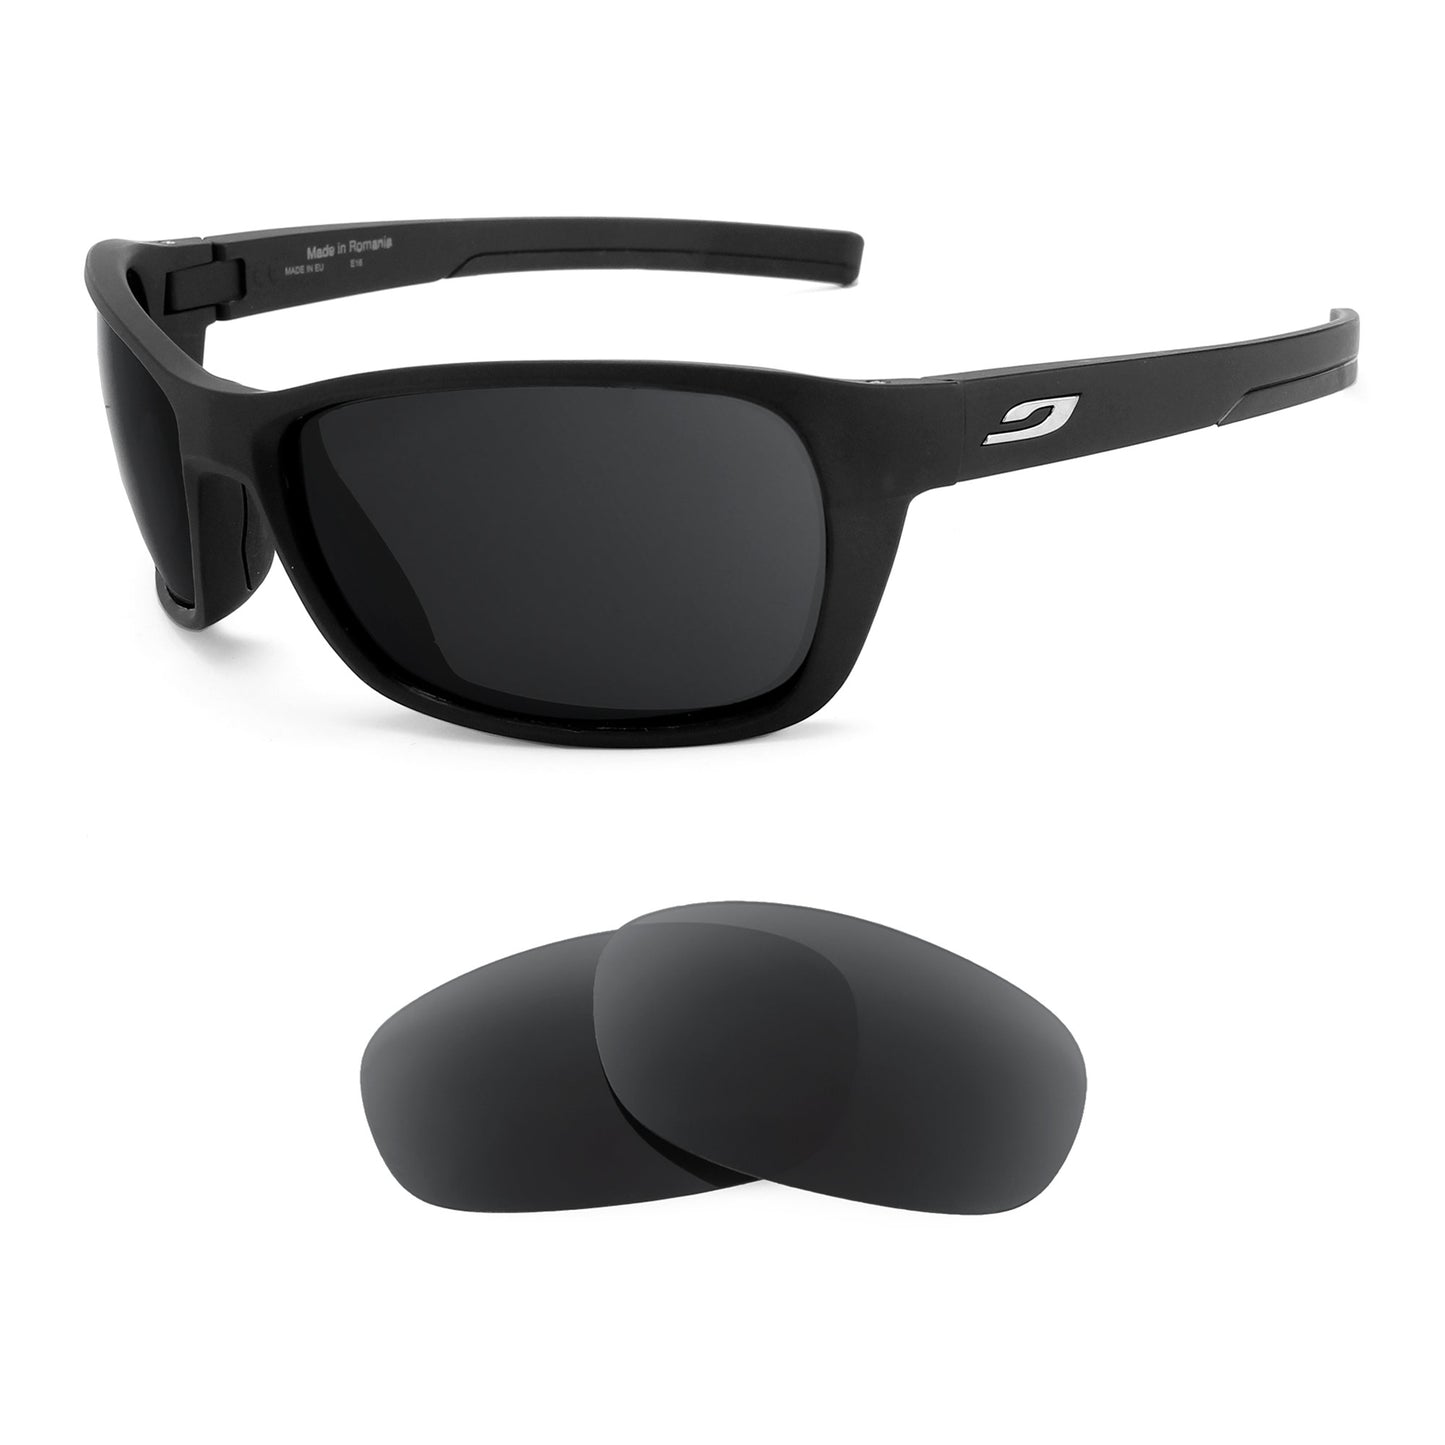 Julbo Blast sunglasses with replacement lenses